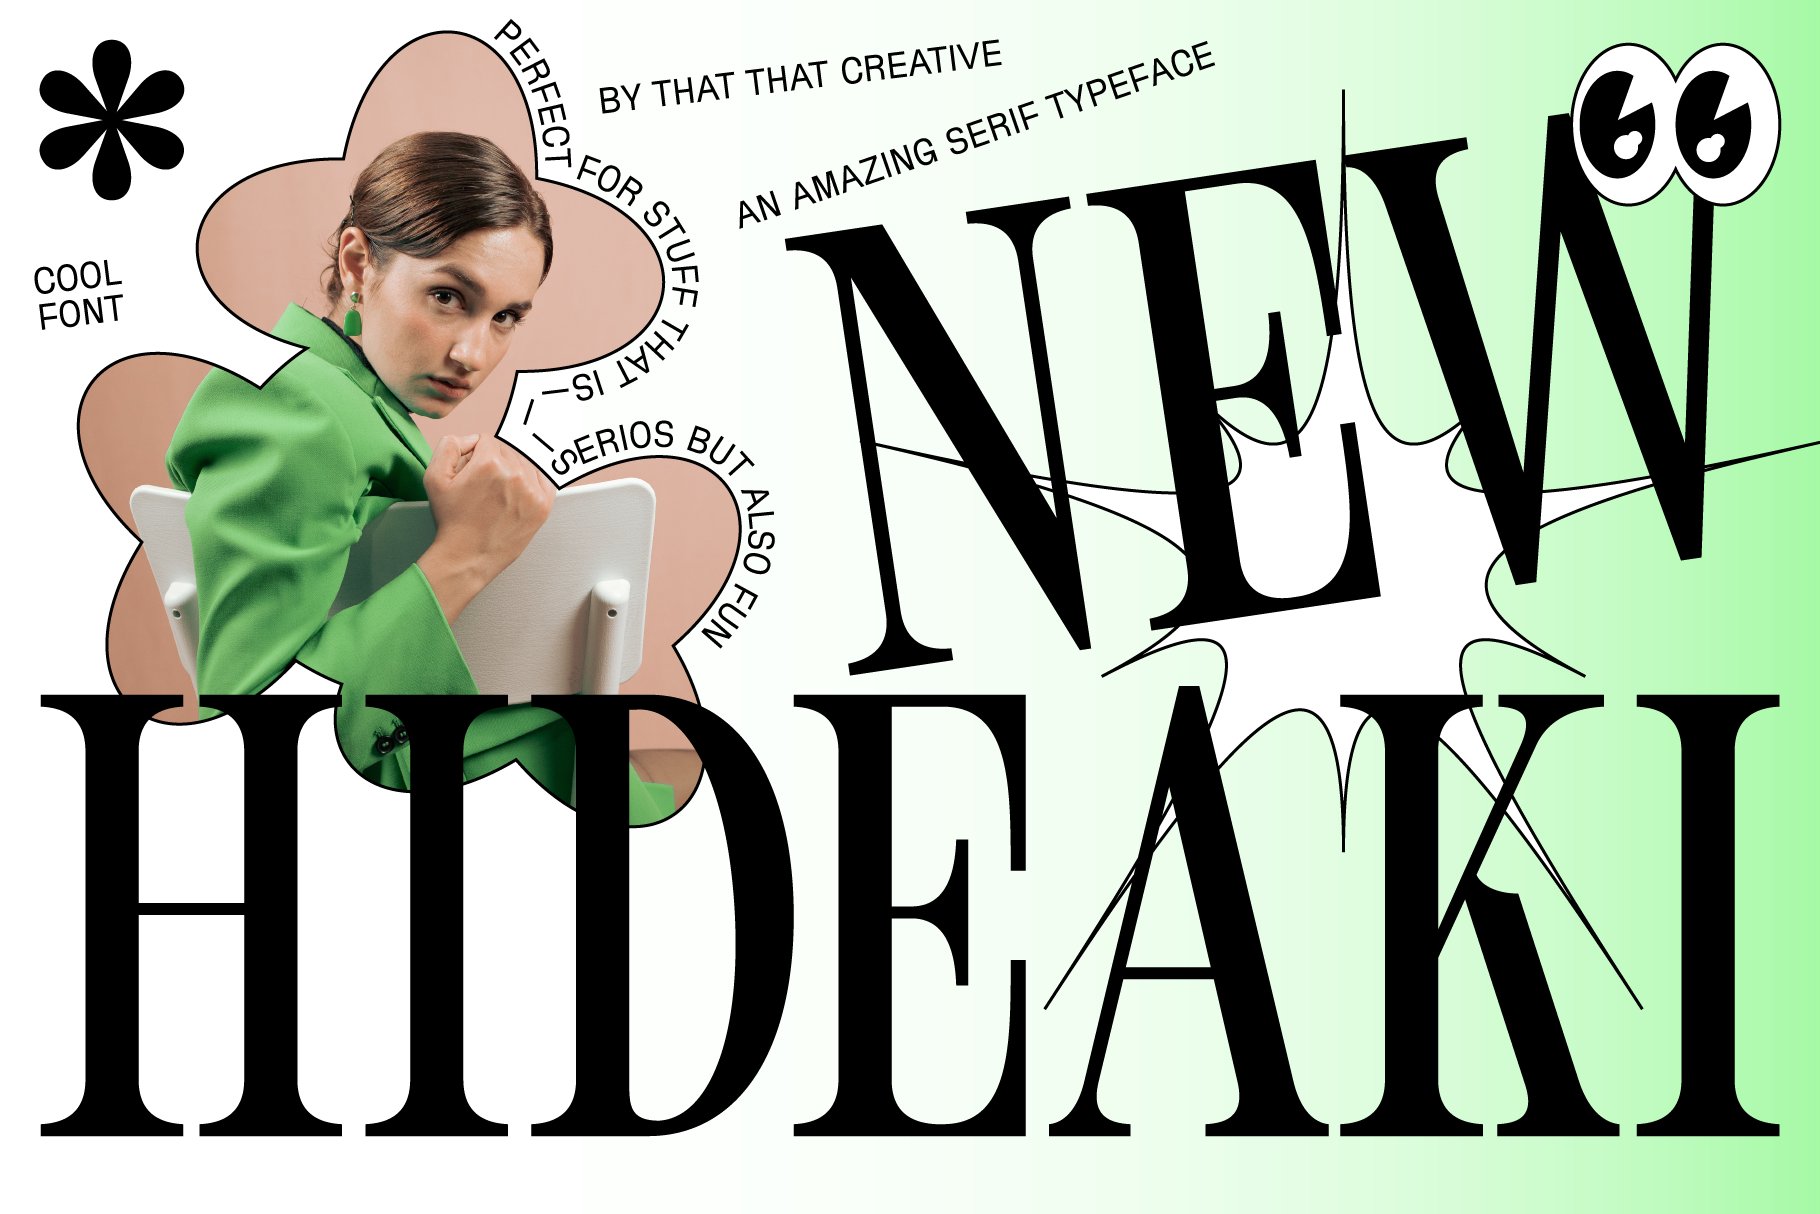 Hideaki Condensed Display Serif cover image.